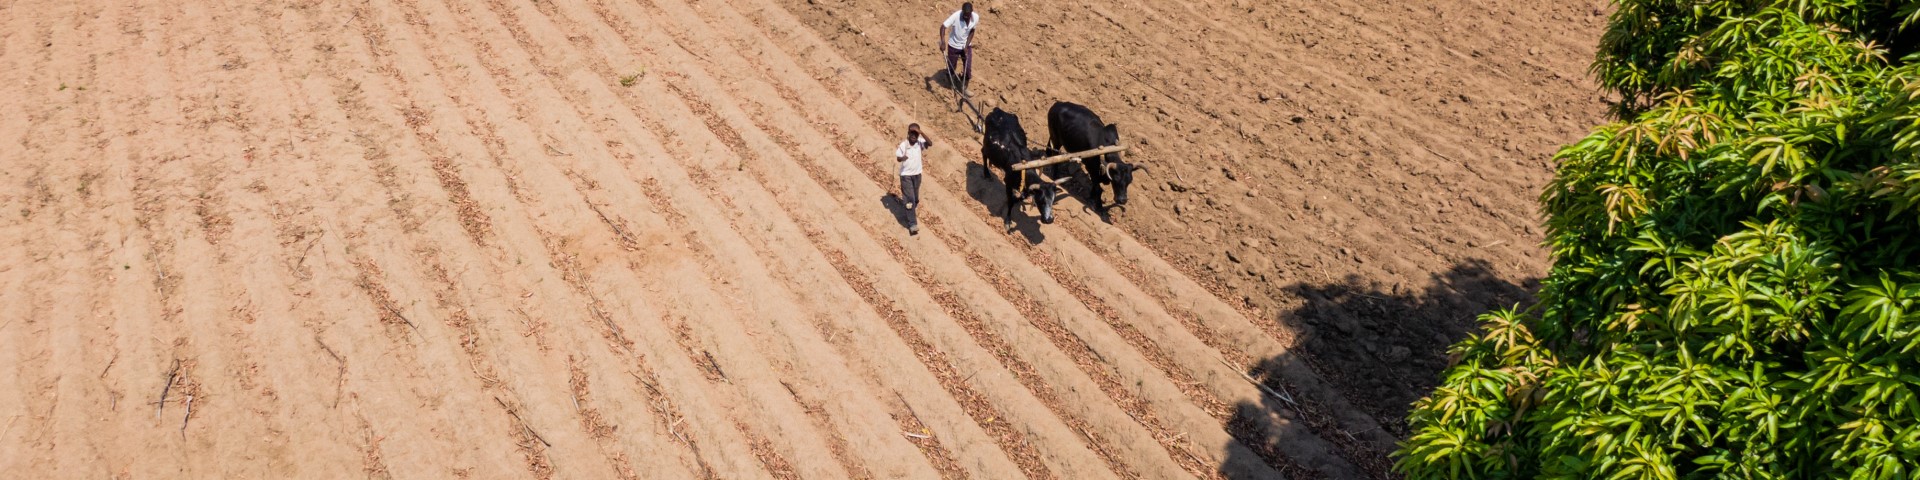 Smallholder farmers work a field with cattle in Eastern Province, Zambia.